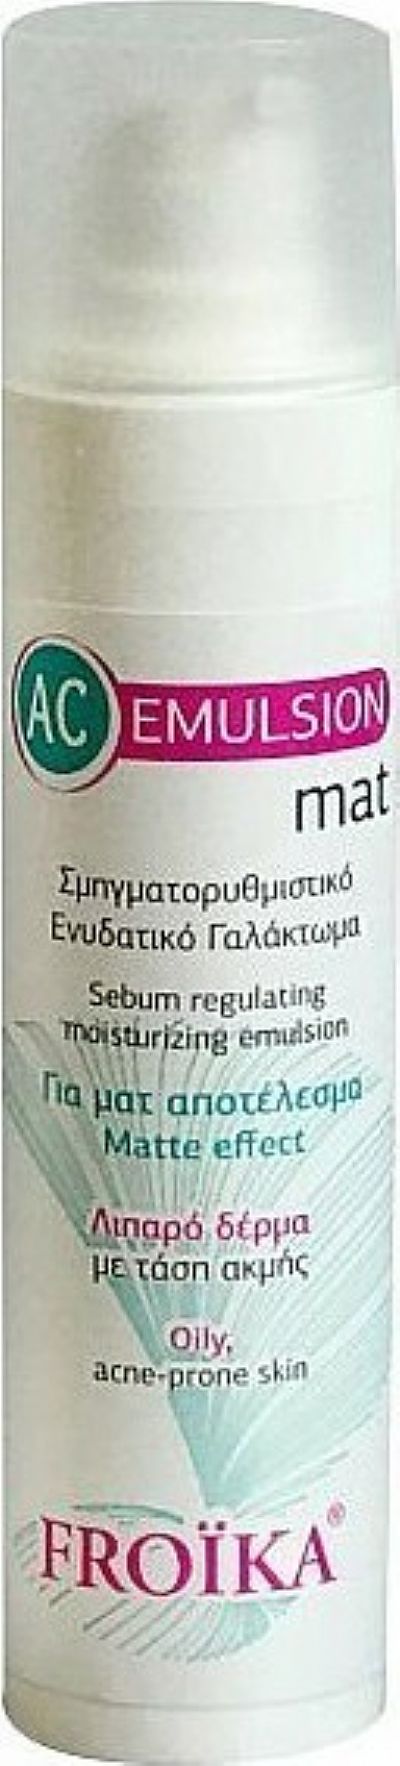 Froika AC Emulsion Mat 40ml  